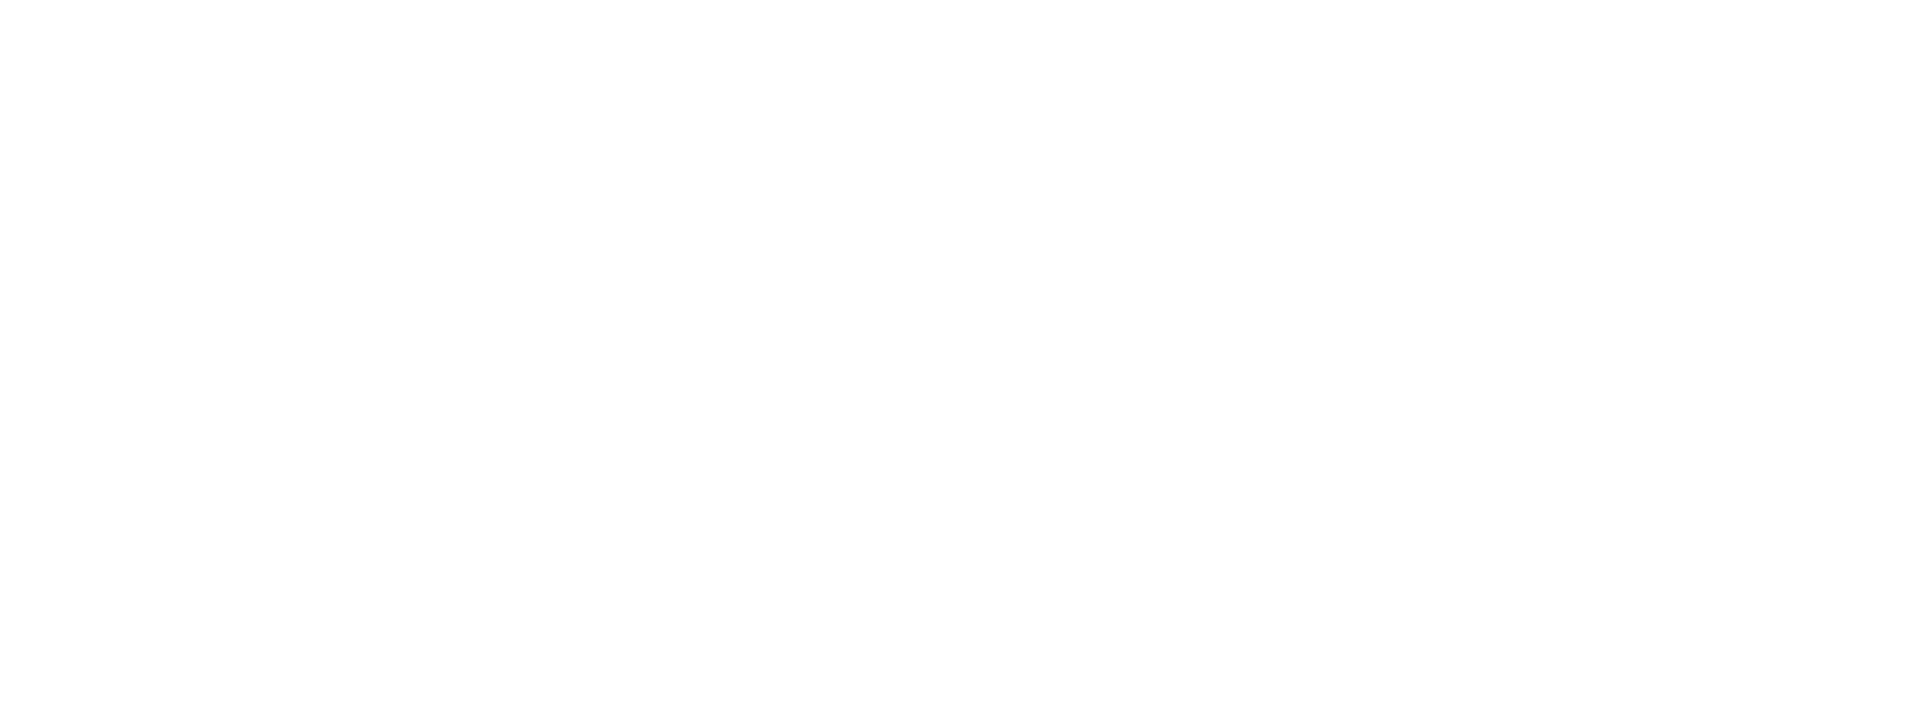 PflegMed x Elephant Agency